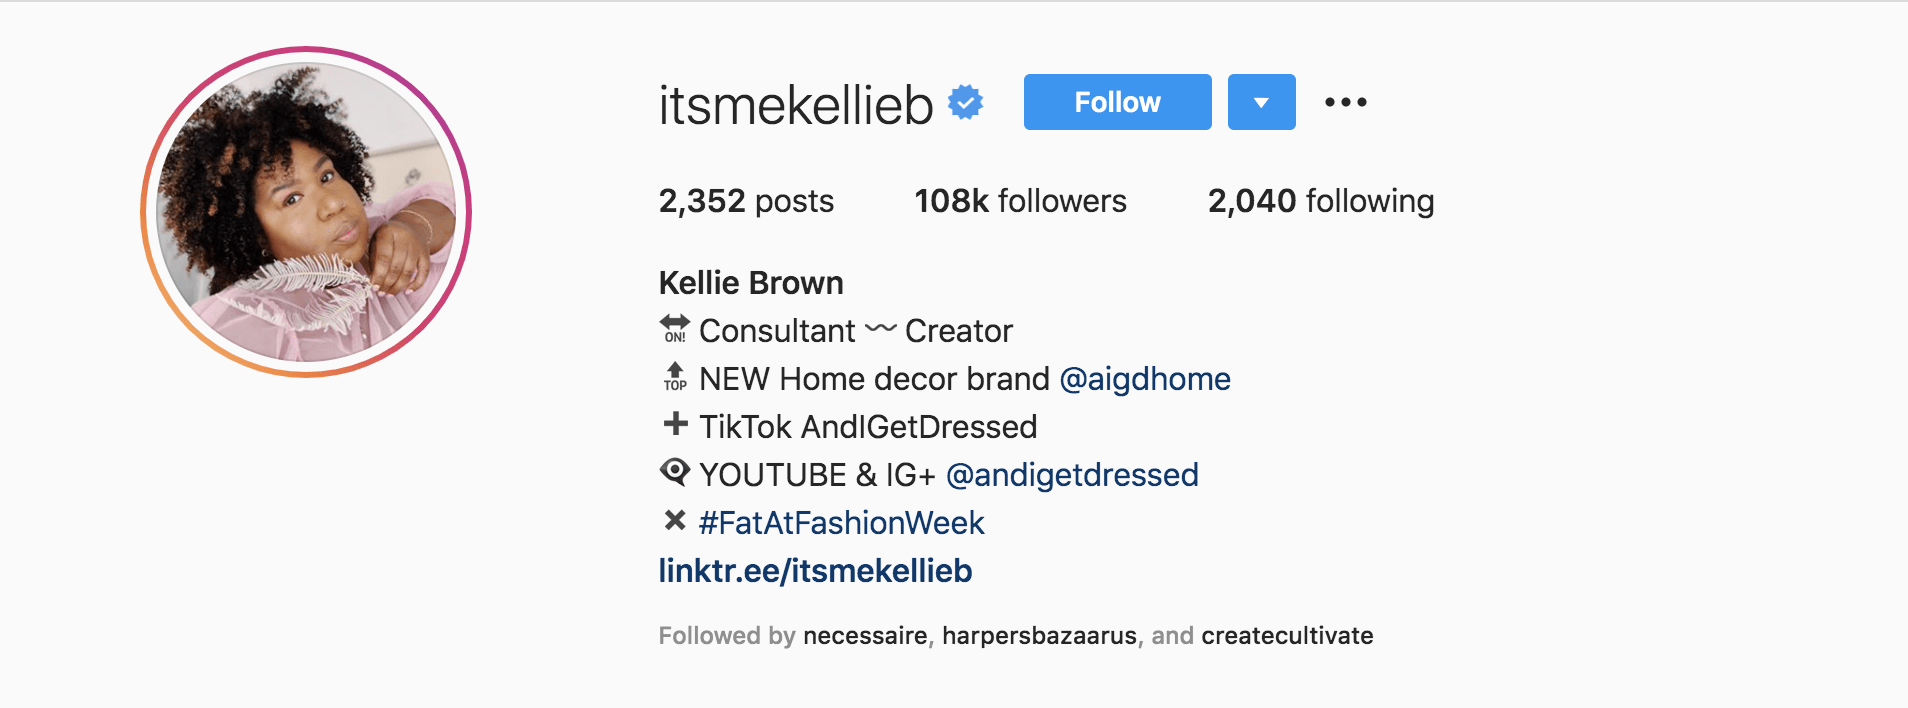 Top Fashion Influencers - Kellie Brown